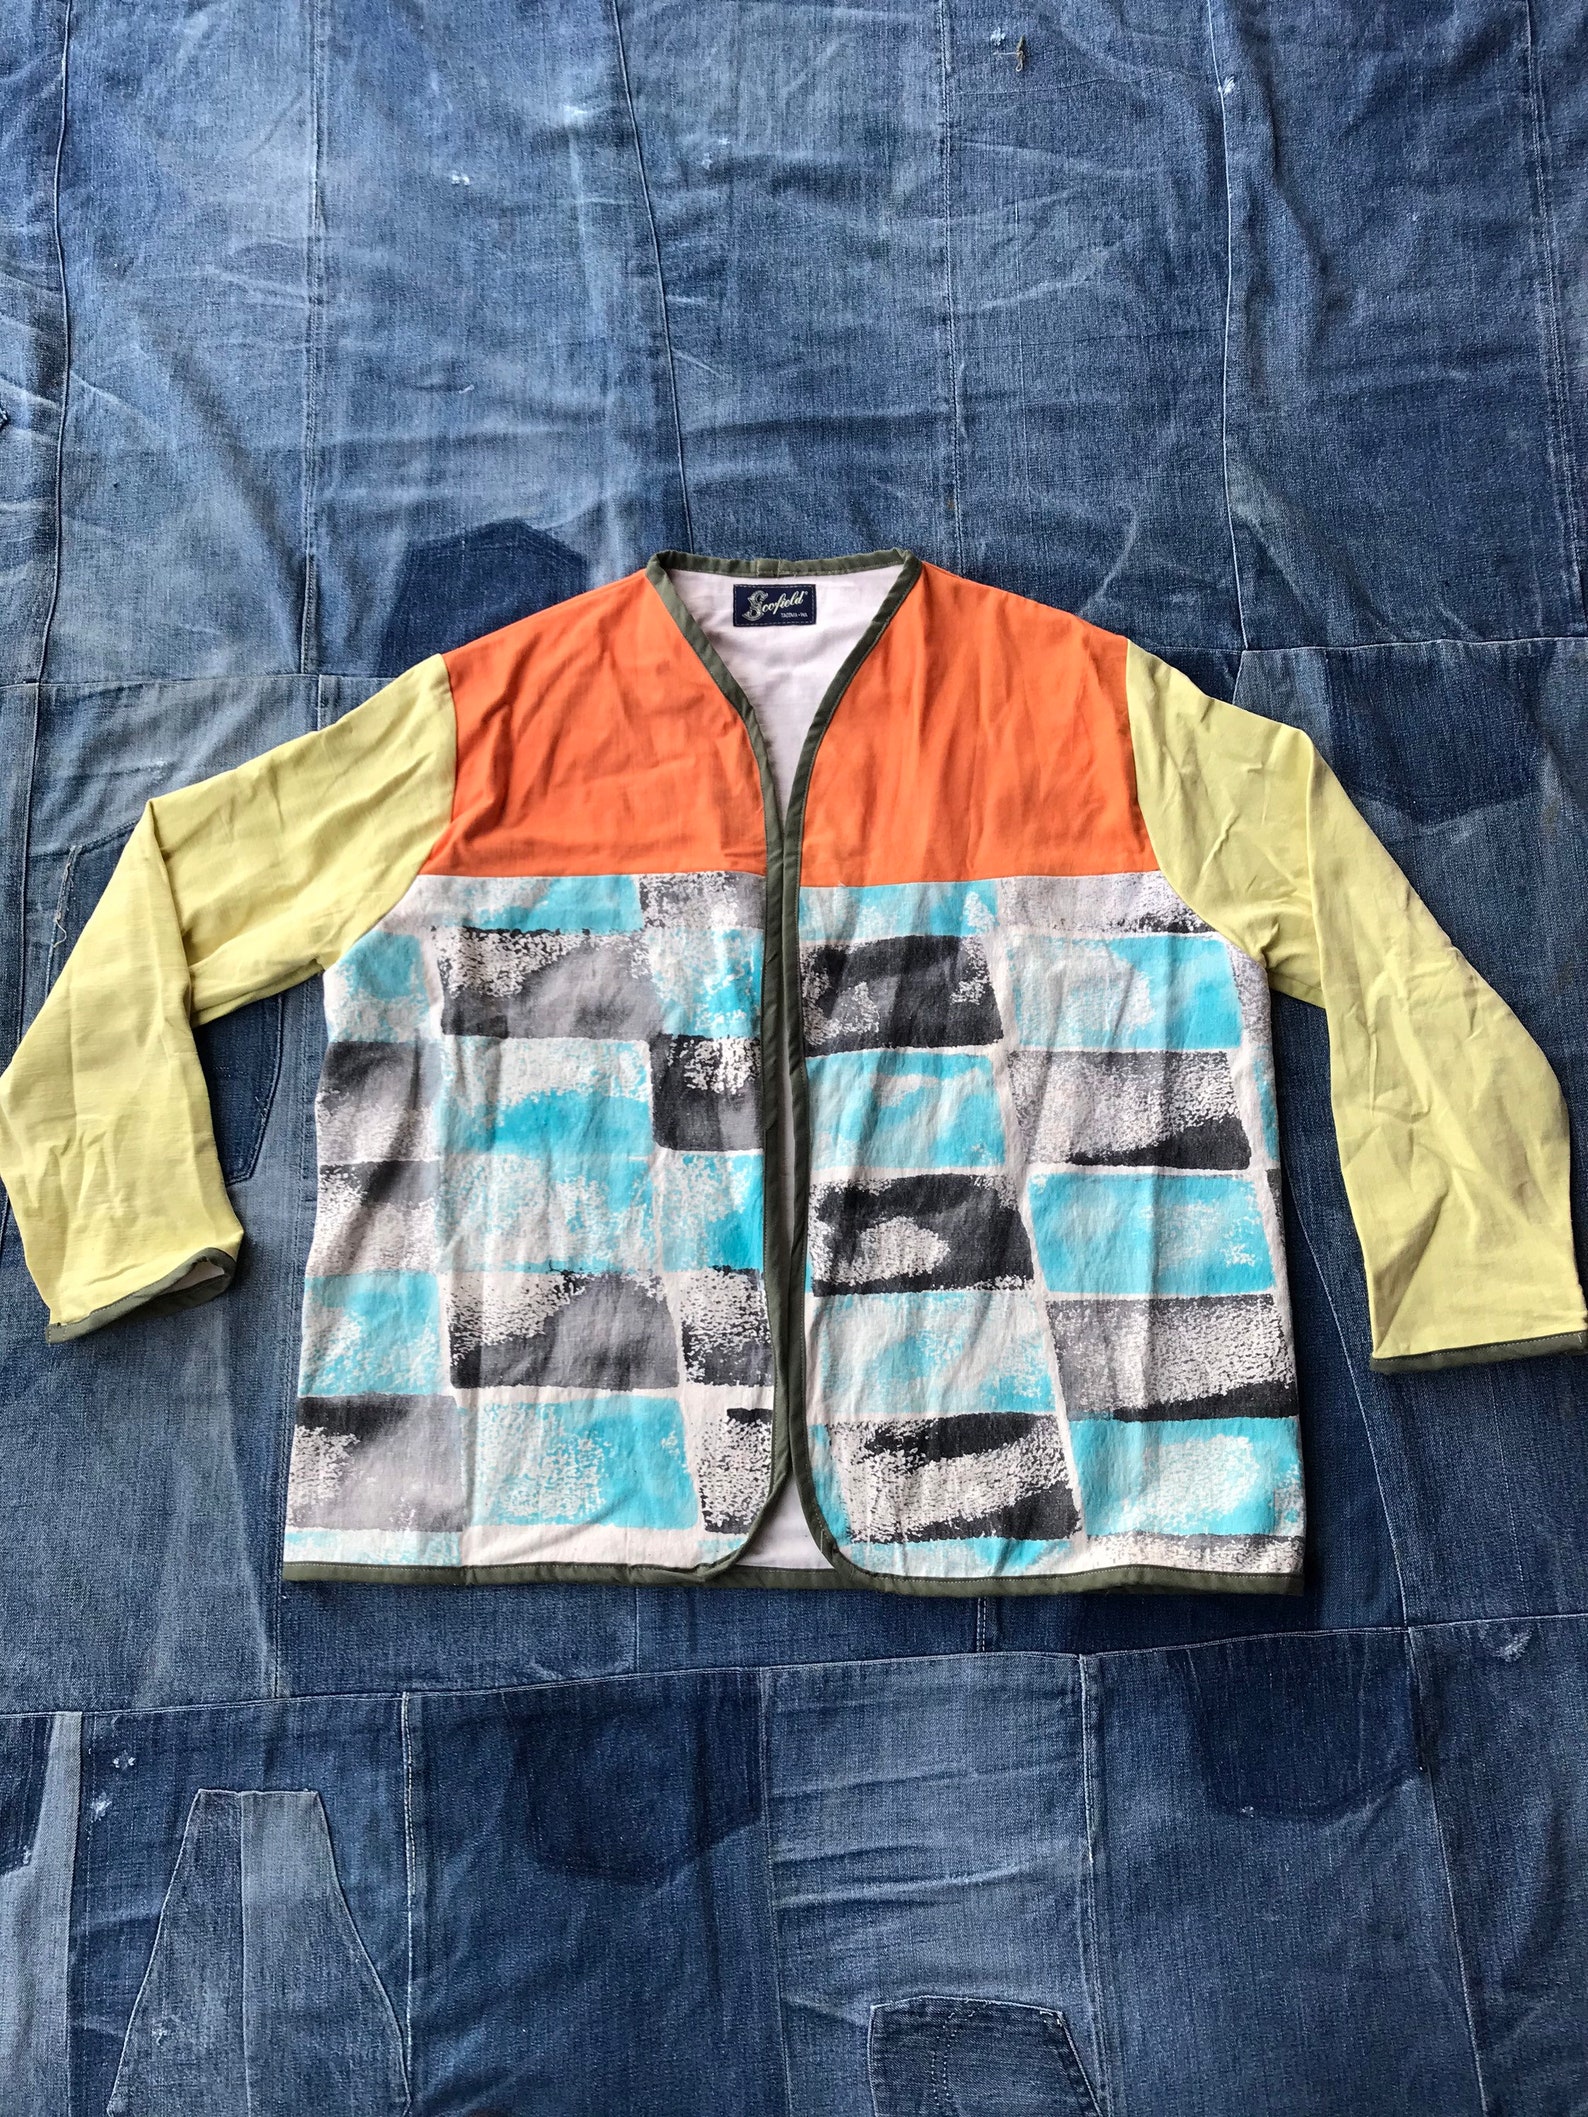 Hand Painted Jacket / Vintage Patchwork Coat / Canvas Chore | Etsy